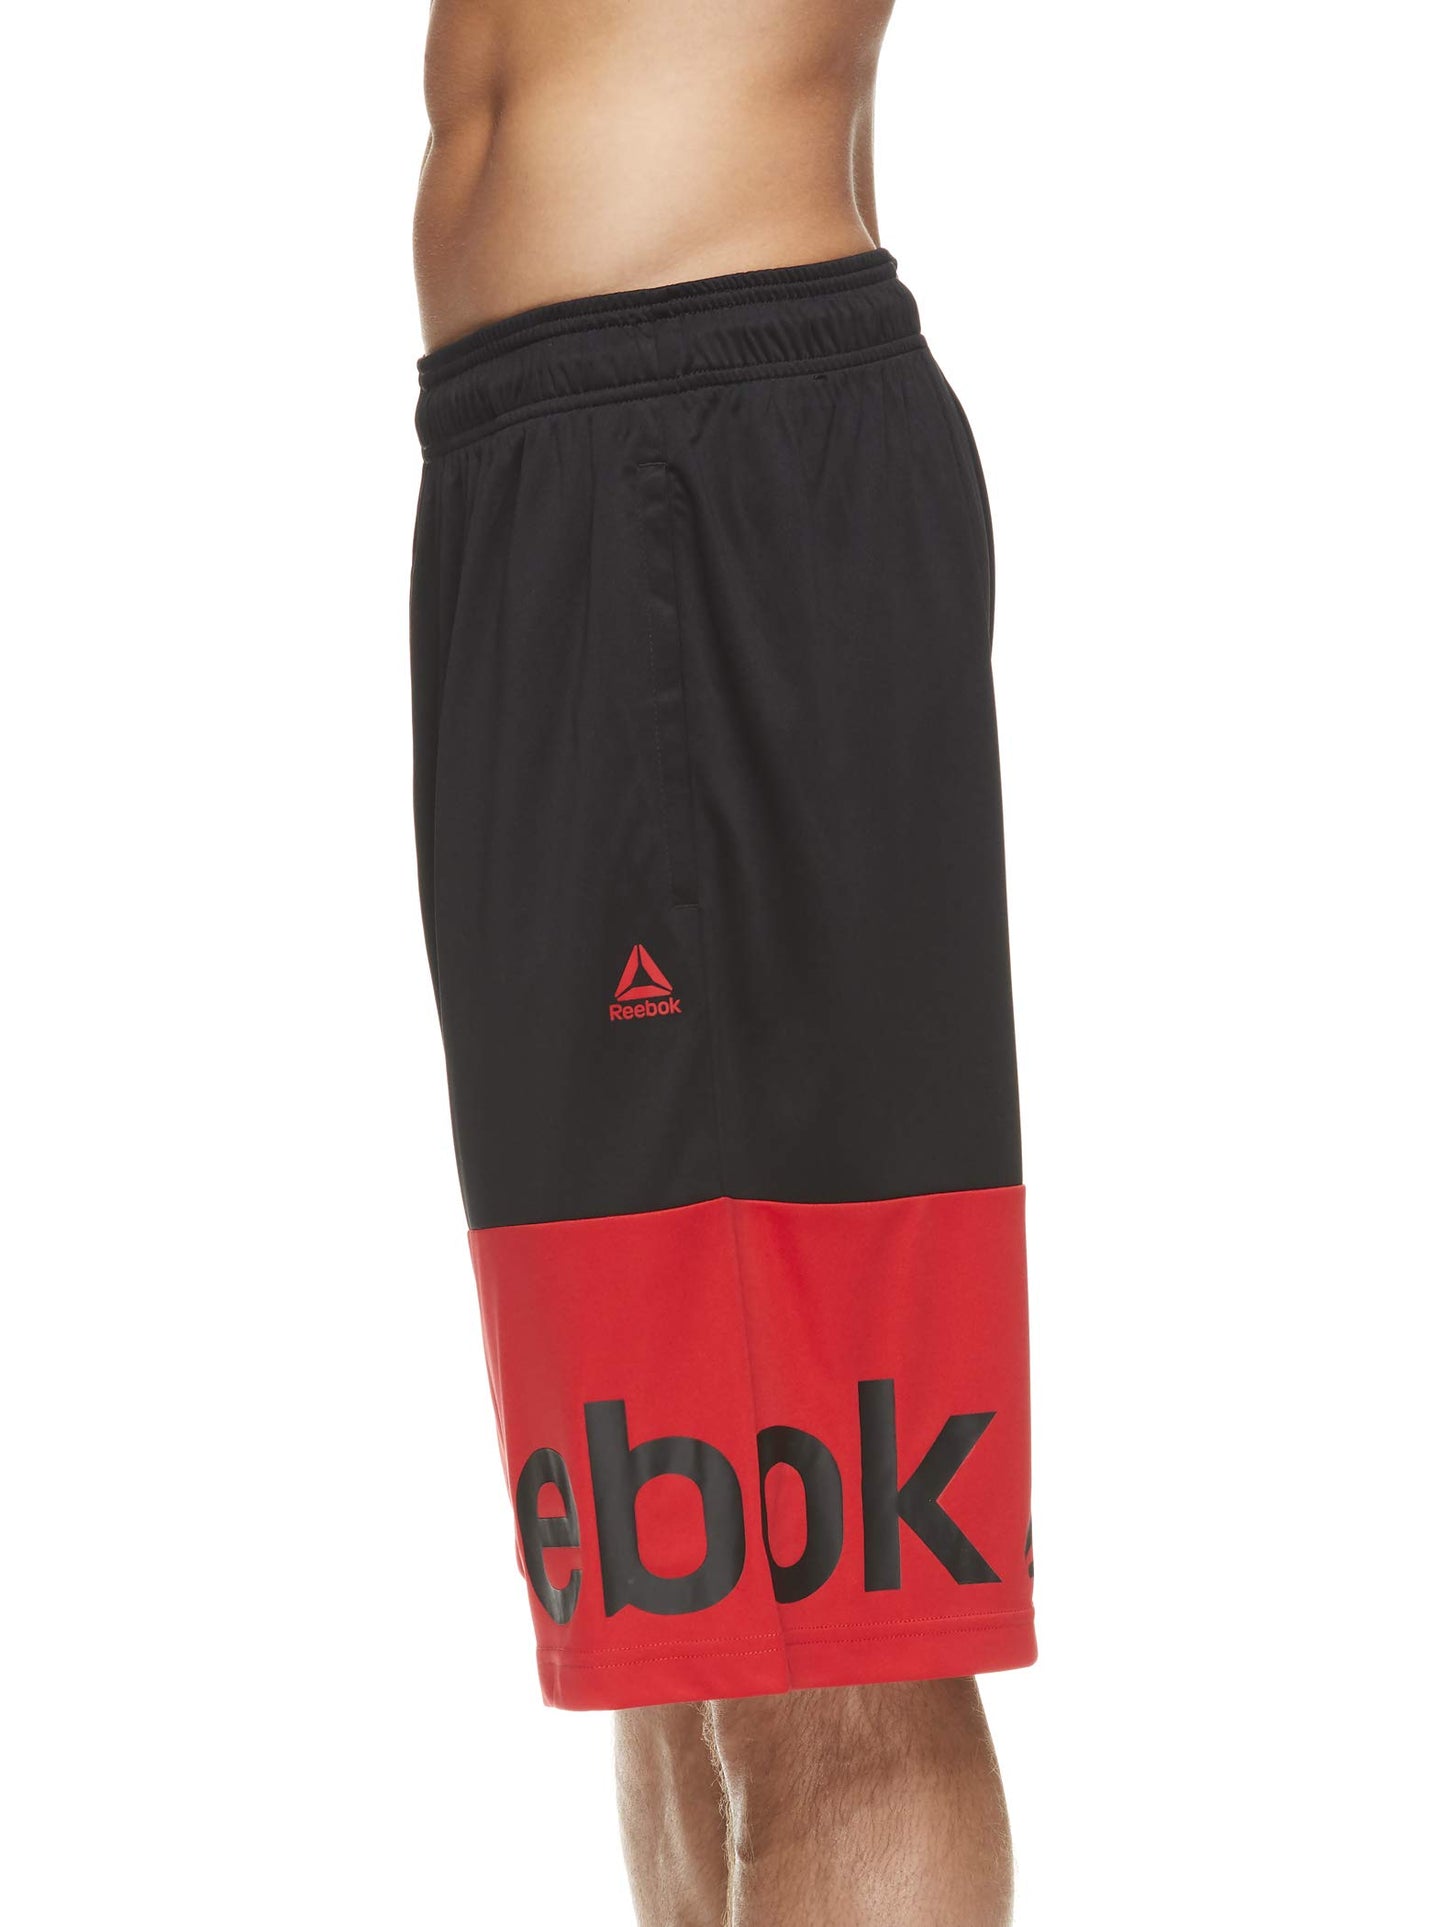 Reebok Men's Mesh Basketball Gym Shorts  Sz M w/Elastic Drawstring Waistband & Pockets - Opticdeals